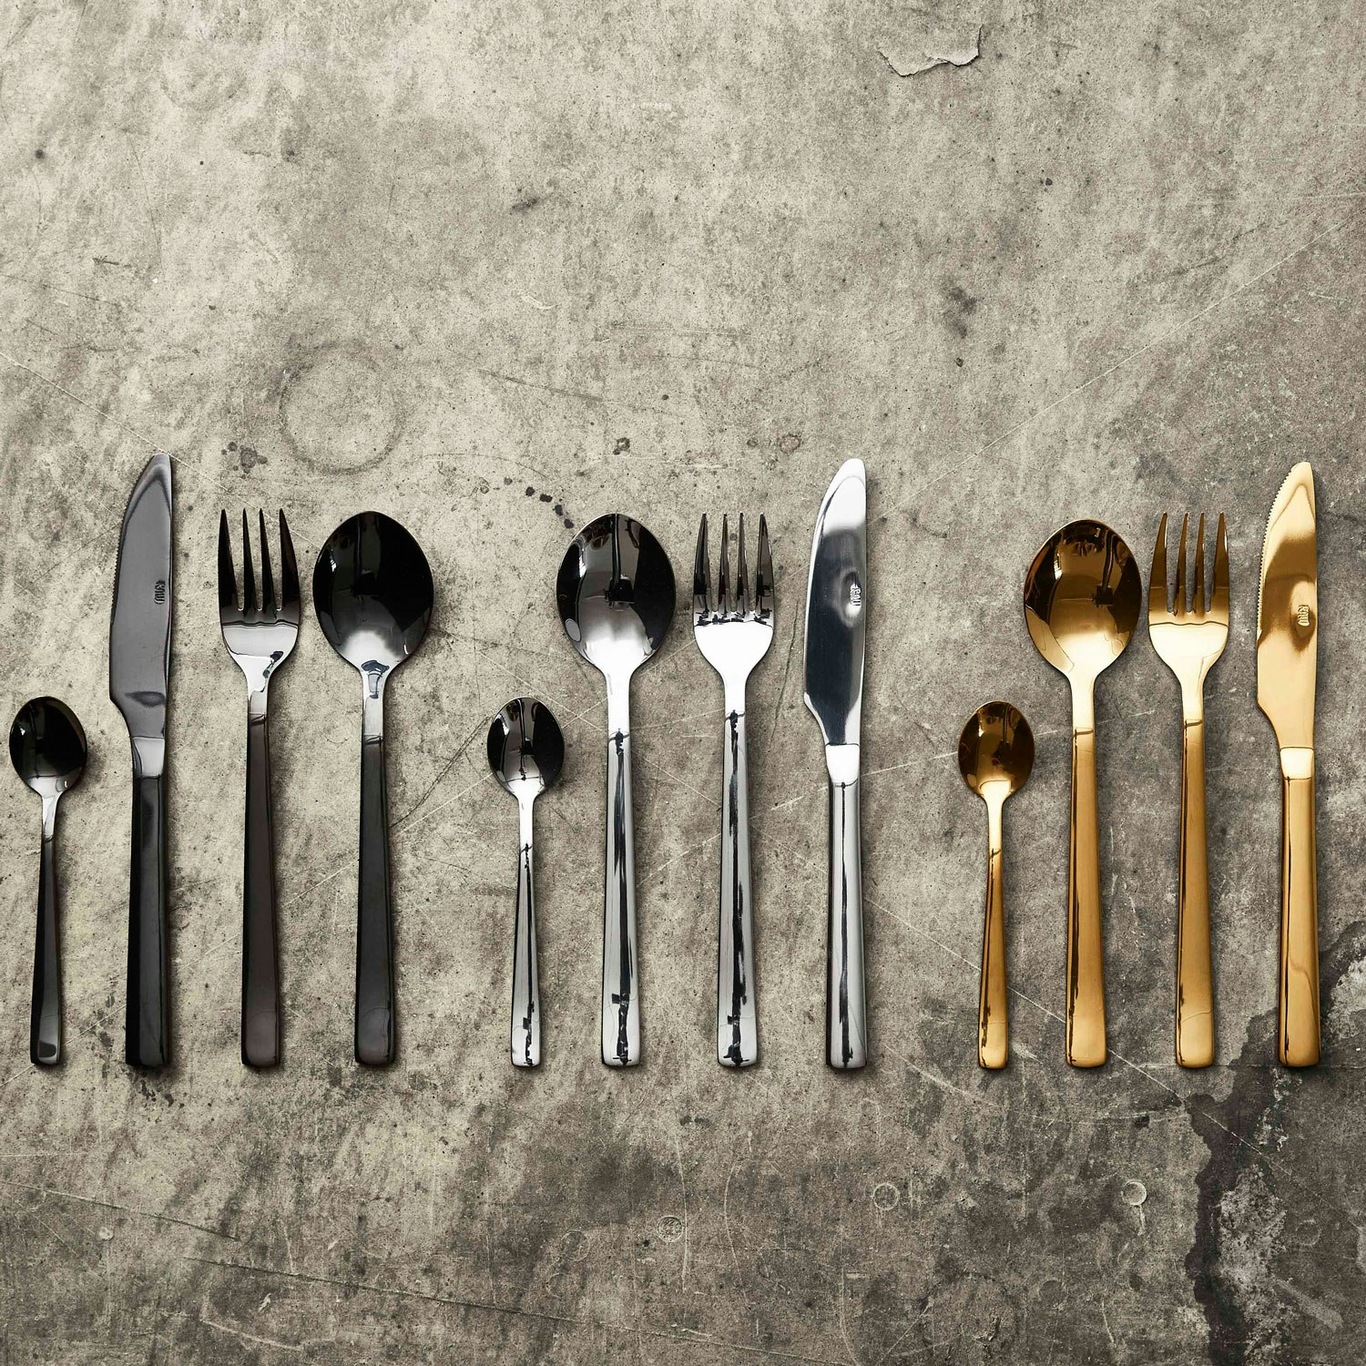 https://royaldesign.com/image/2/aida-raw-cutlery-set-48-pieces-23?w=800&quality=80